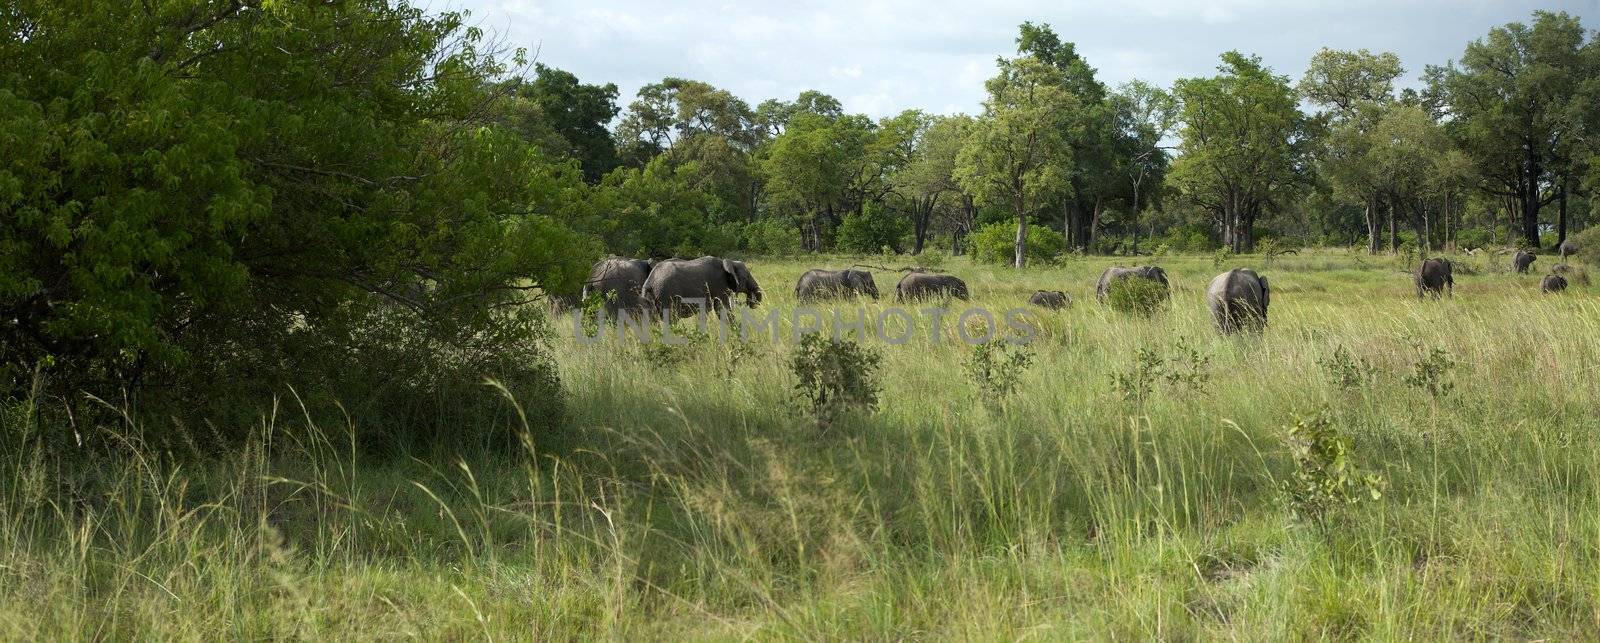 Elephant in the bush - Moremi Nature Reserve in Botswana